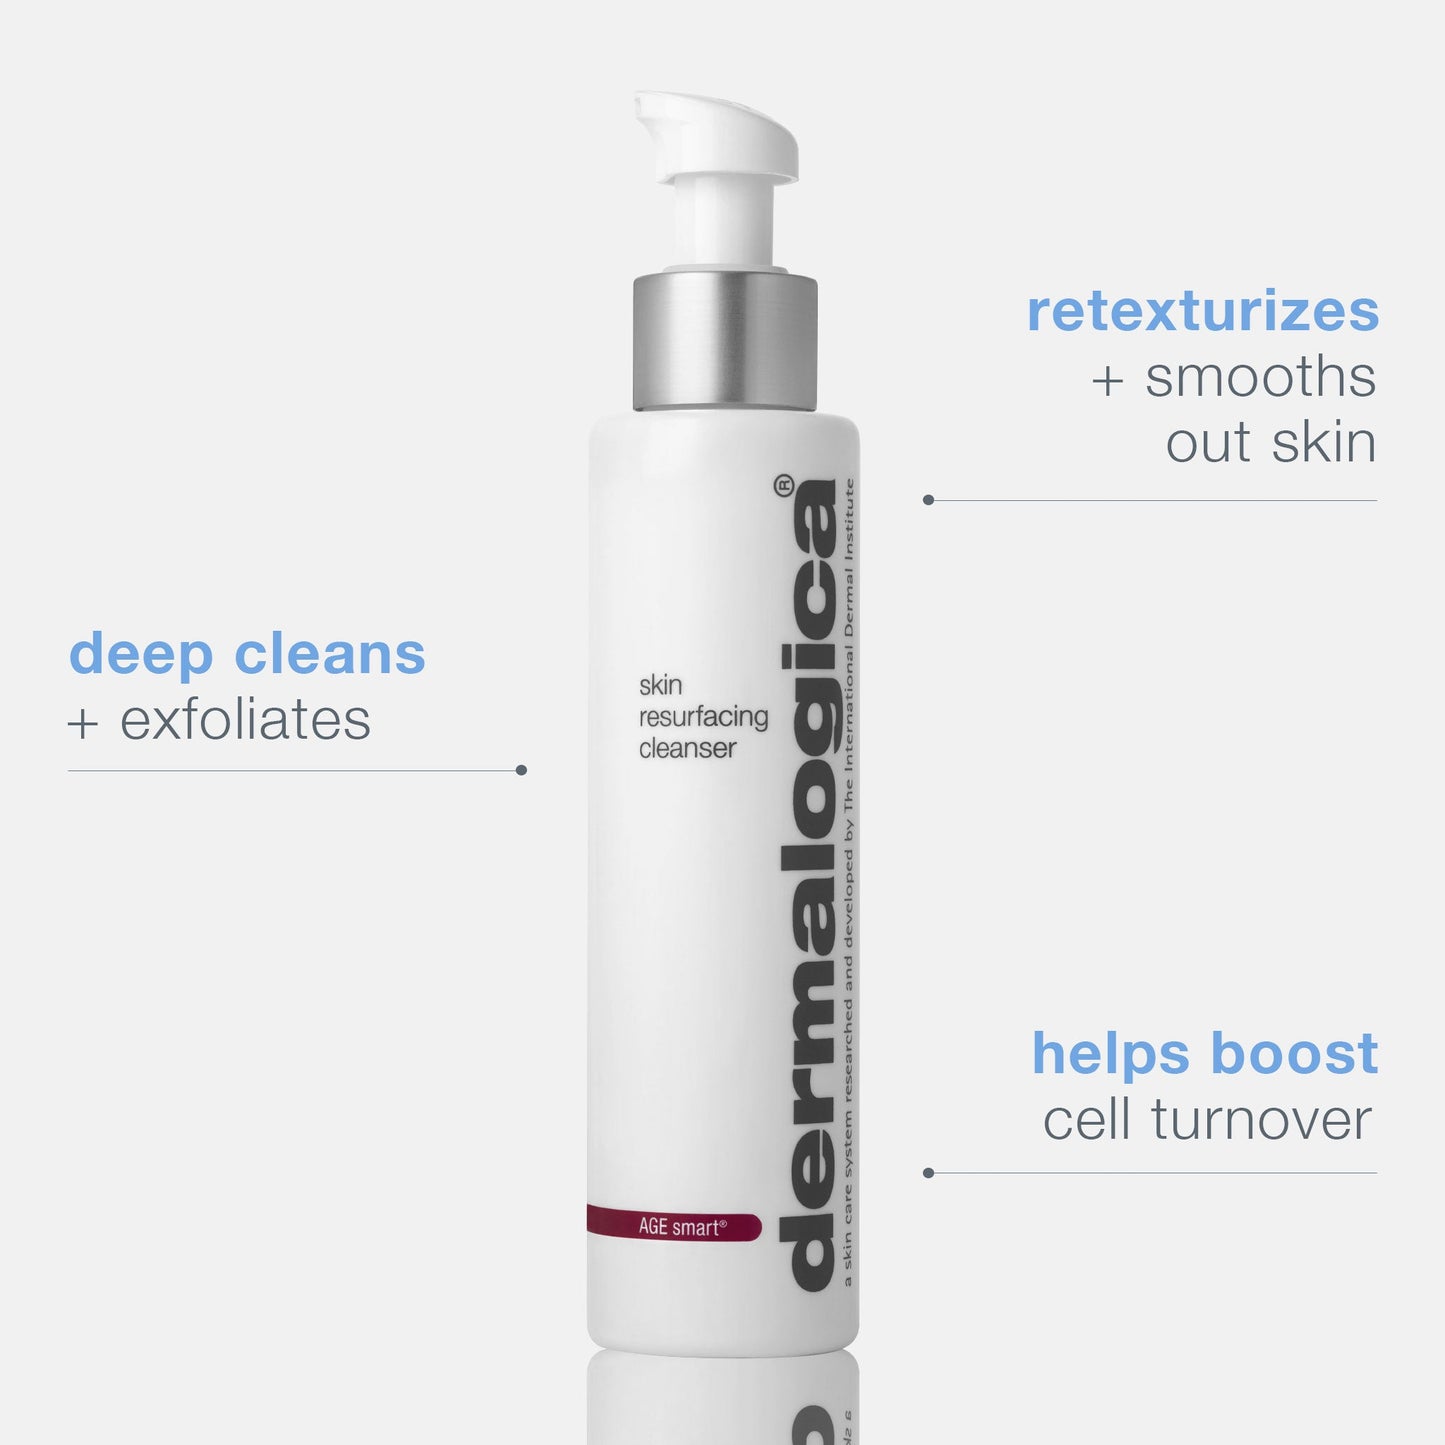 skin resurfacing cleanser benefits